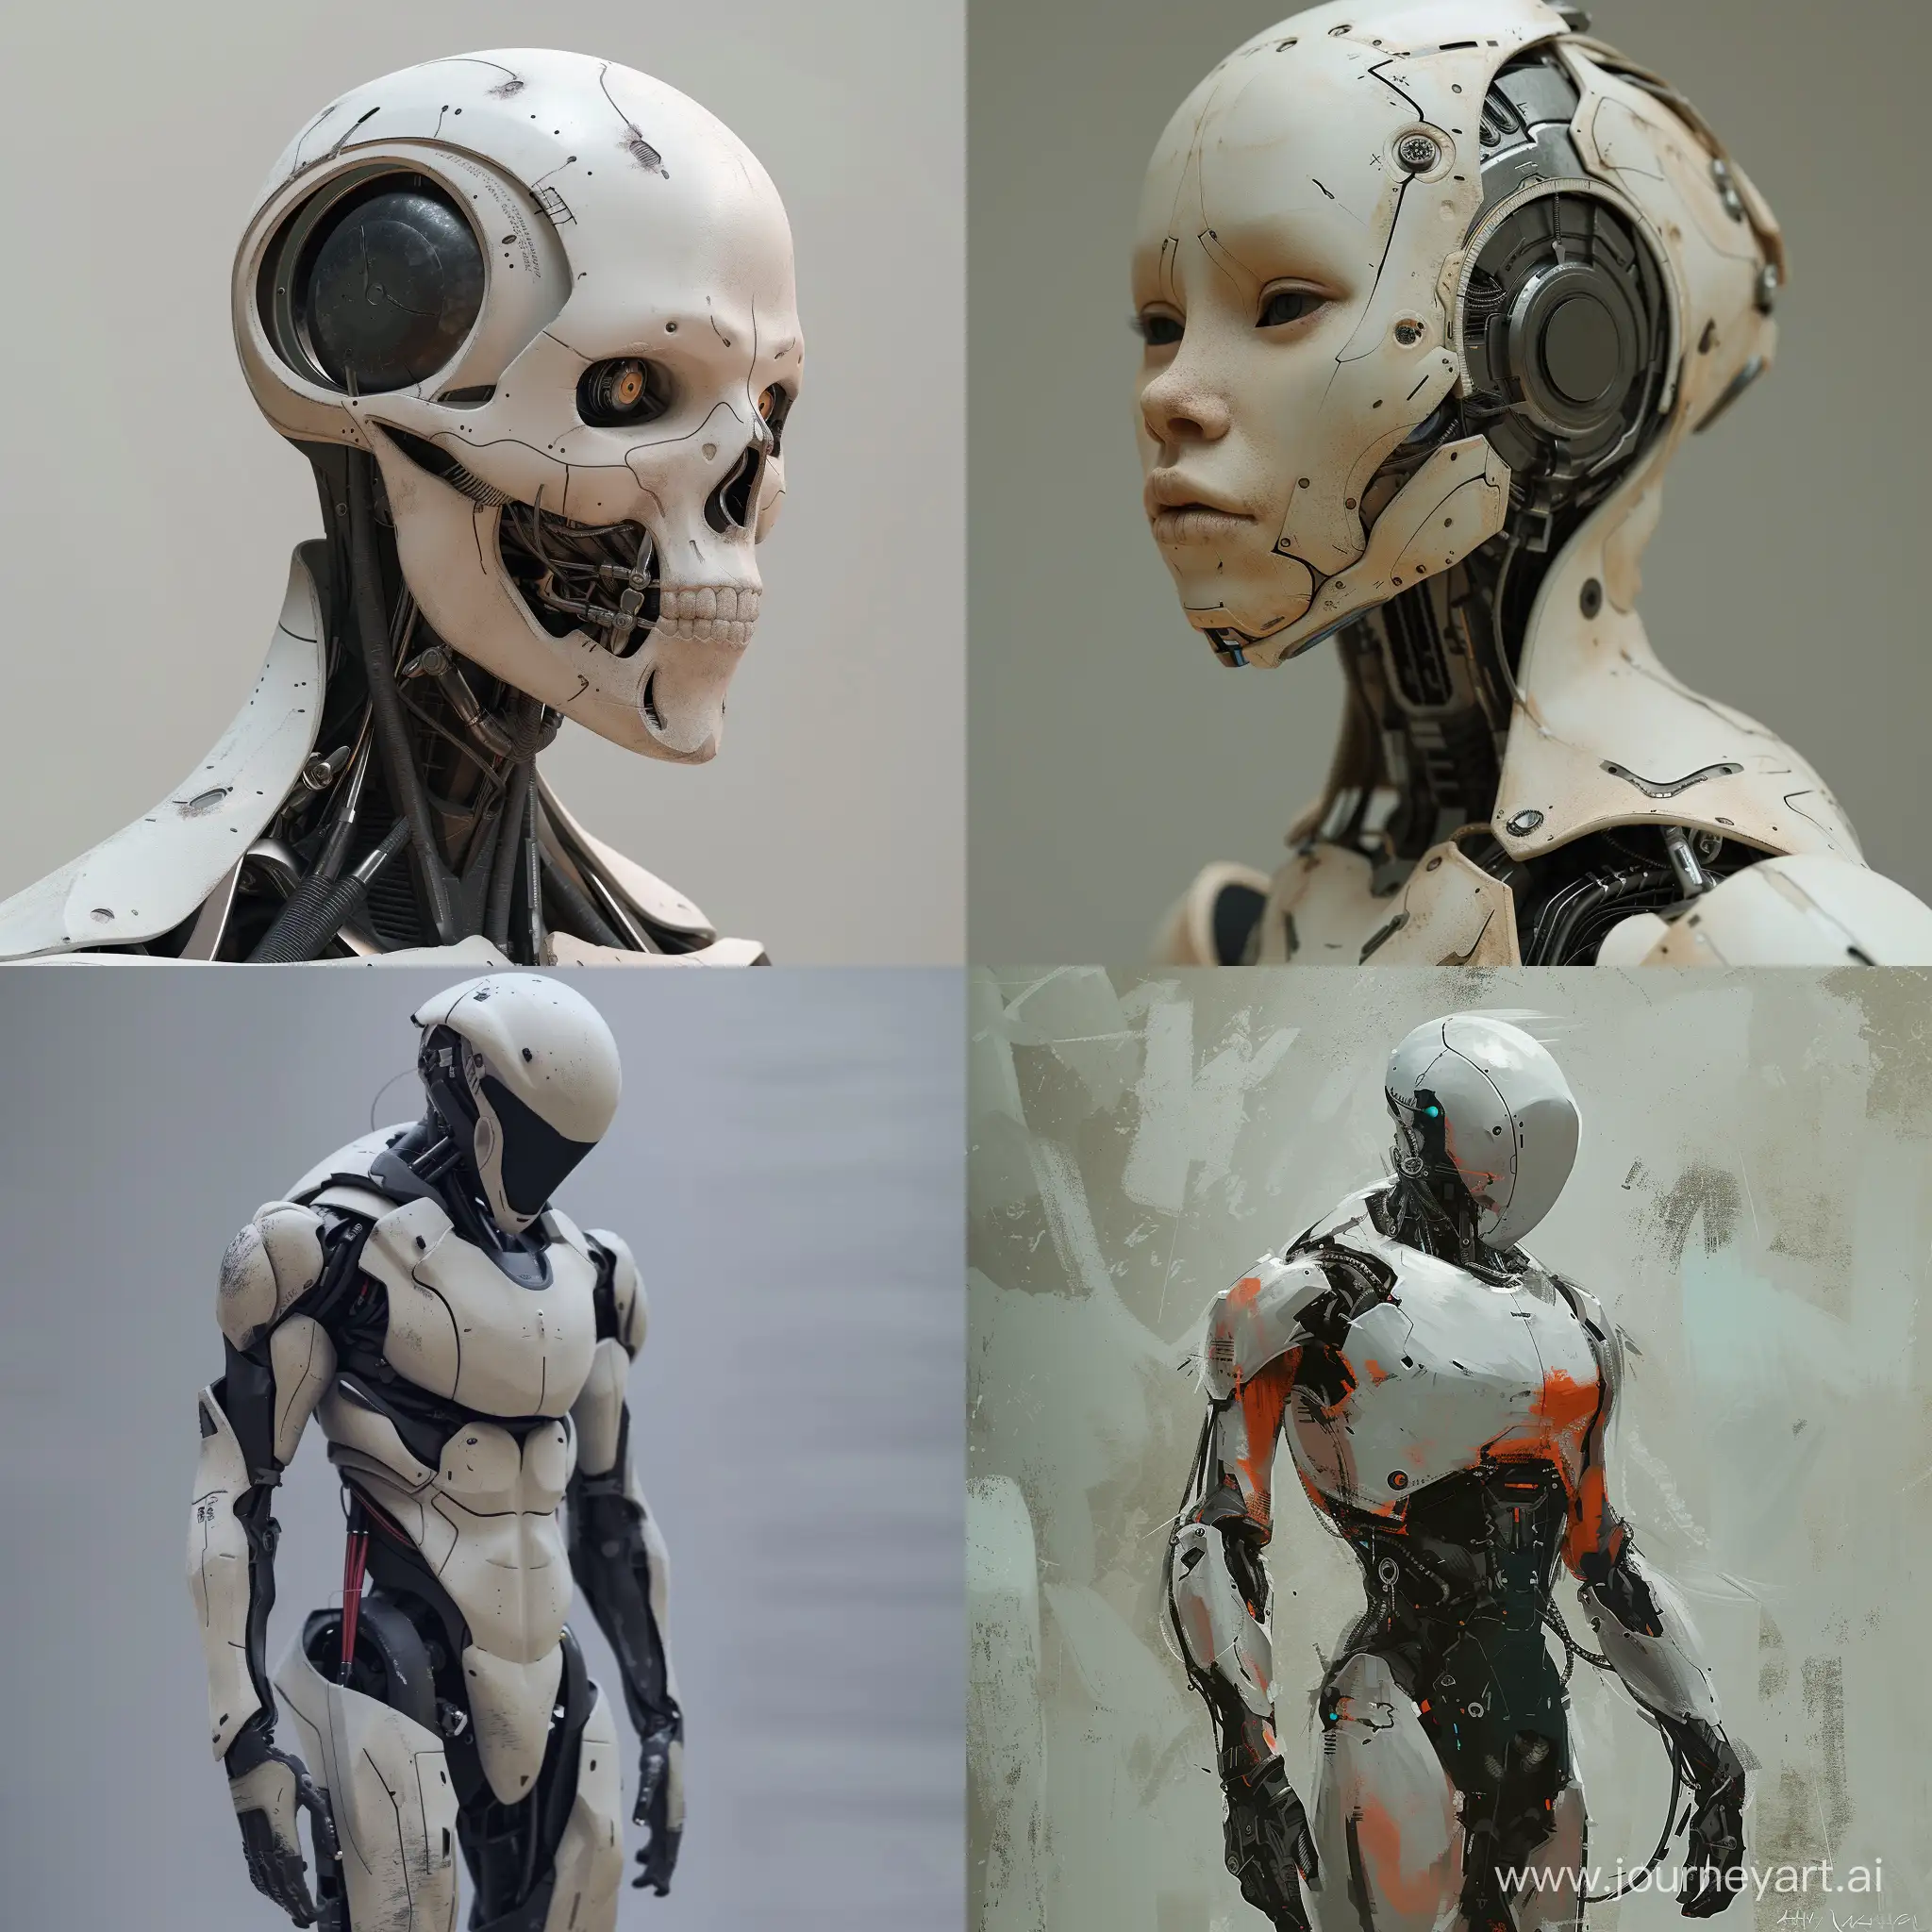 Futuristic-Humanoid-Robot-in-a-11-Aspect-Ratio-Environment